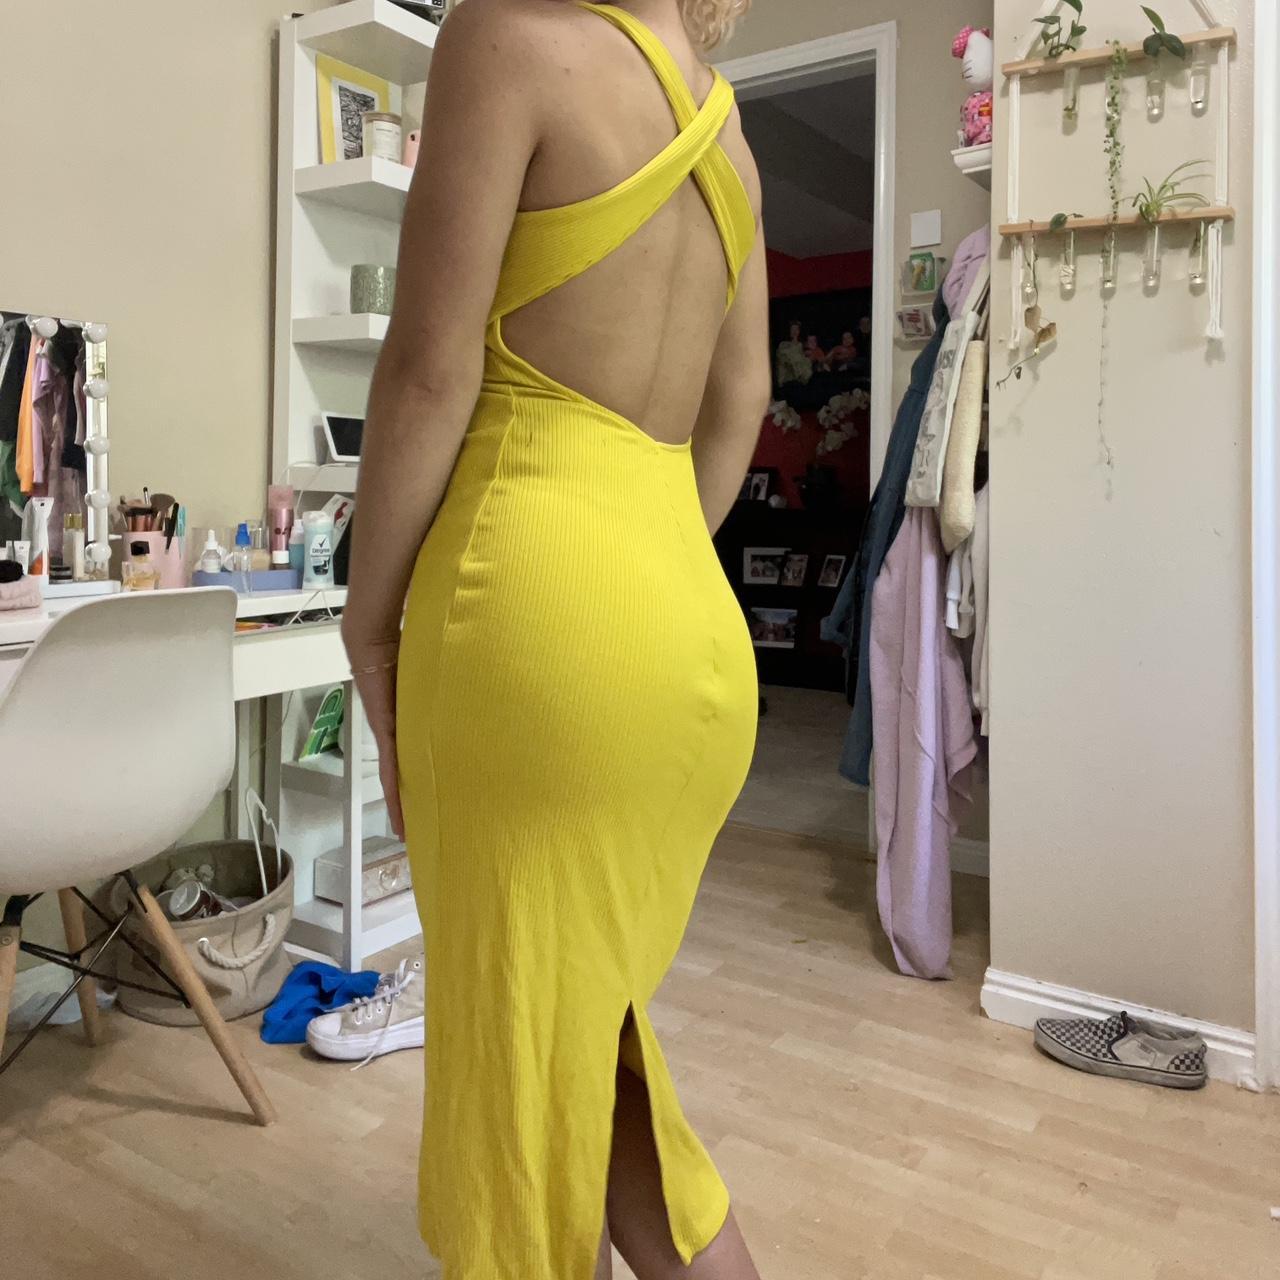 Yellow One Shoulder Draped Midi Dress